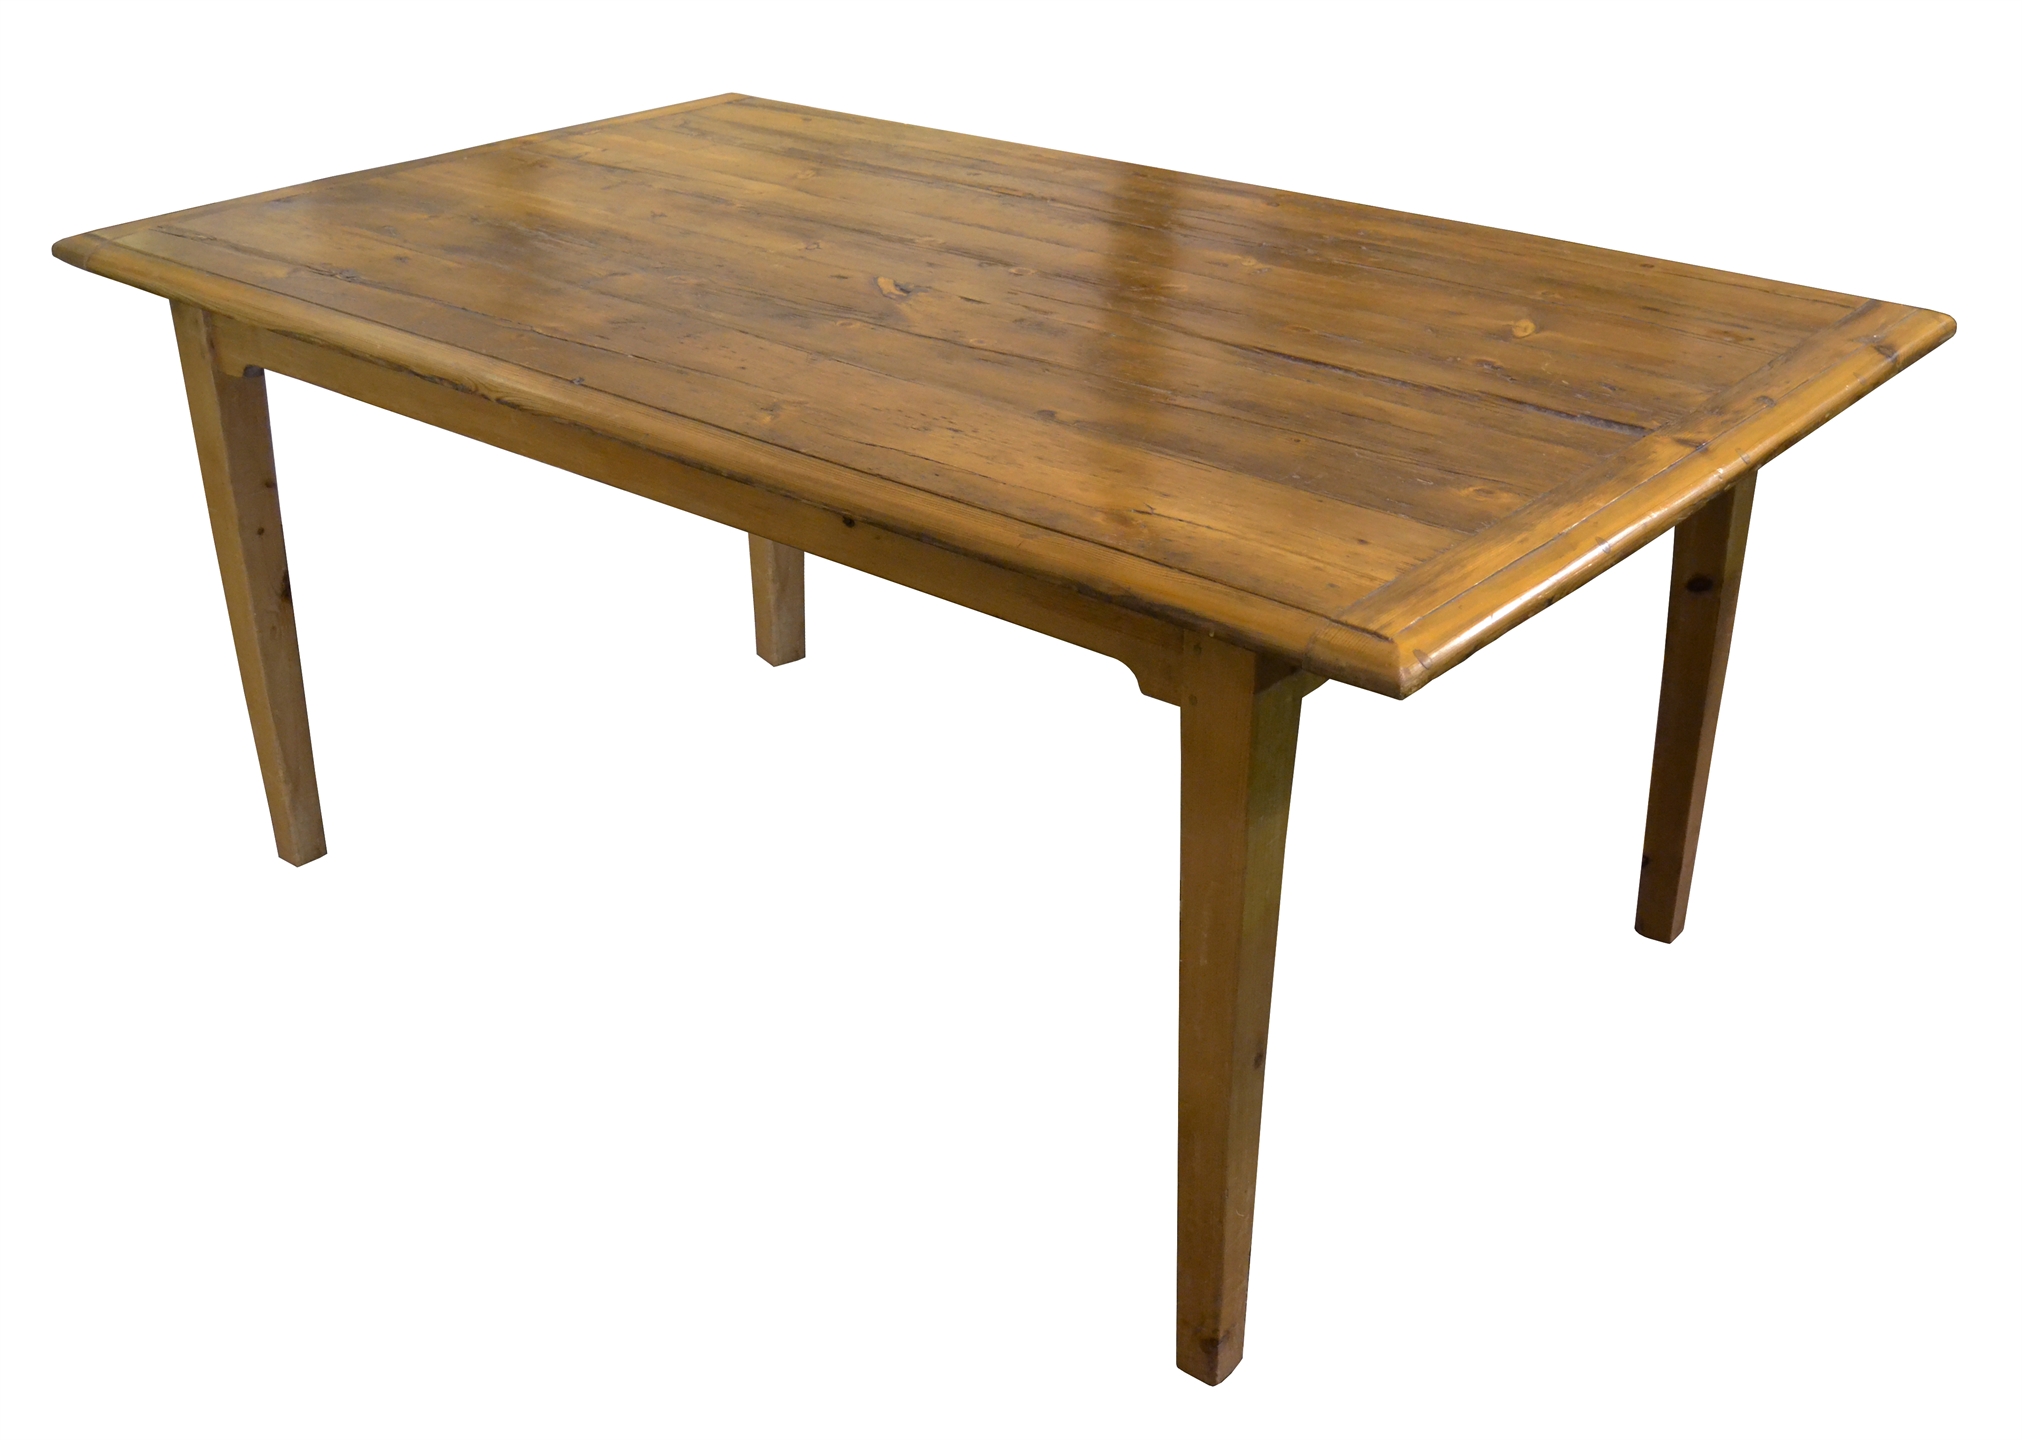 82/1044 - Rustic Pine Farm Table